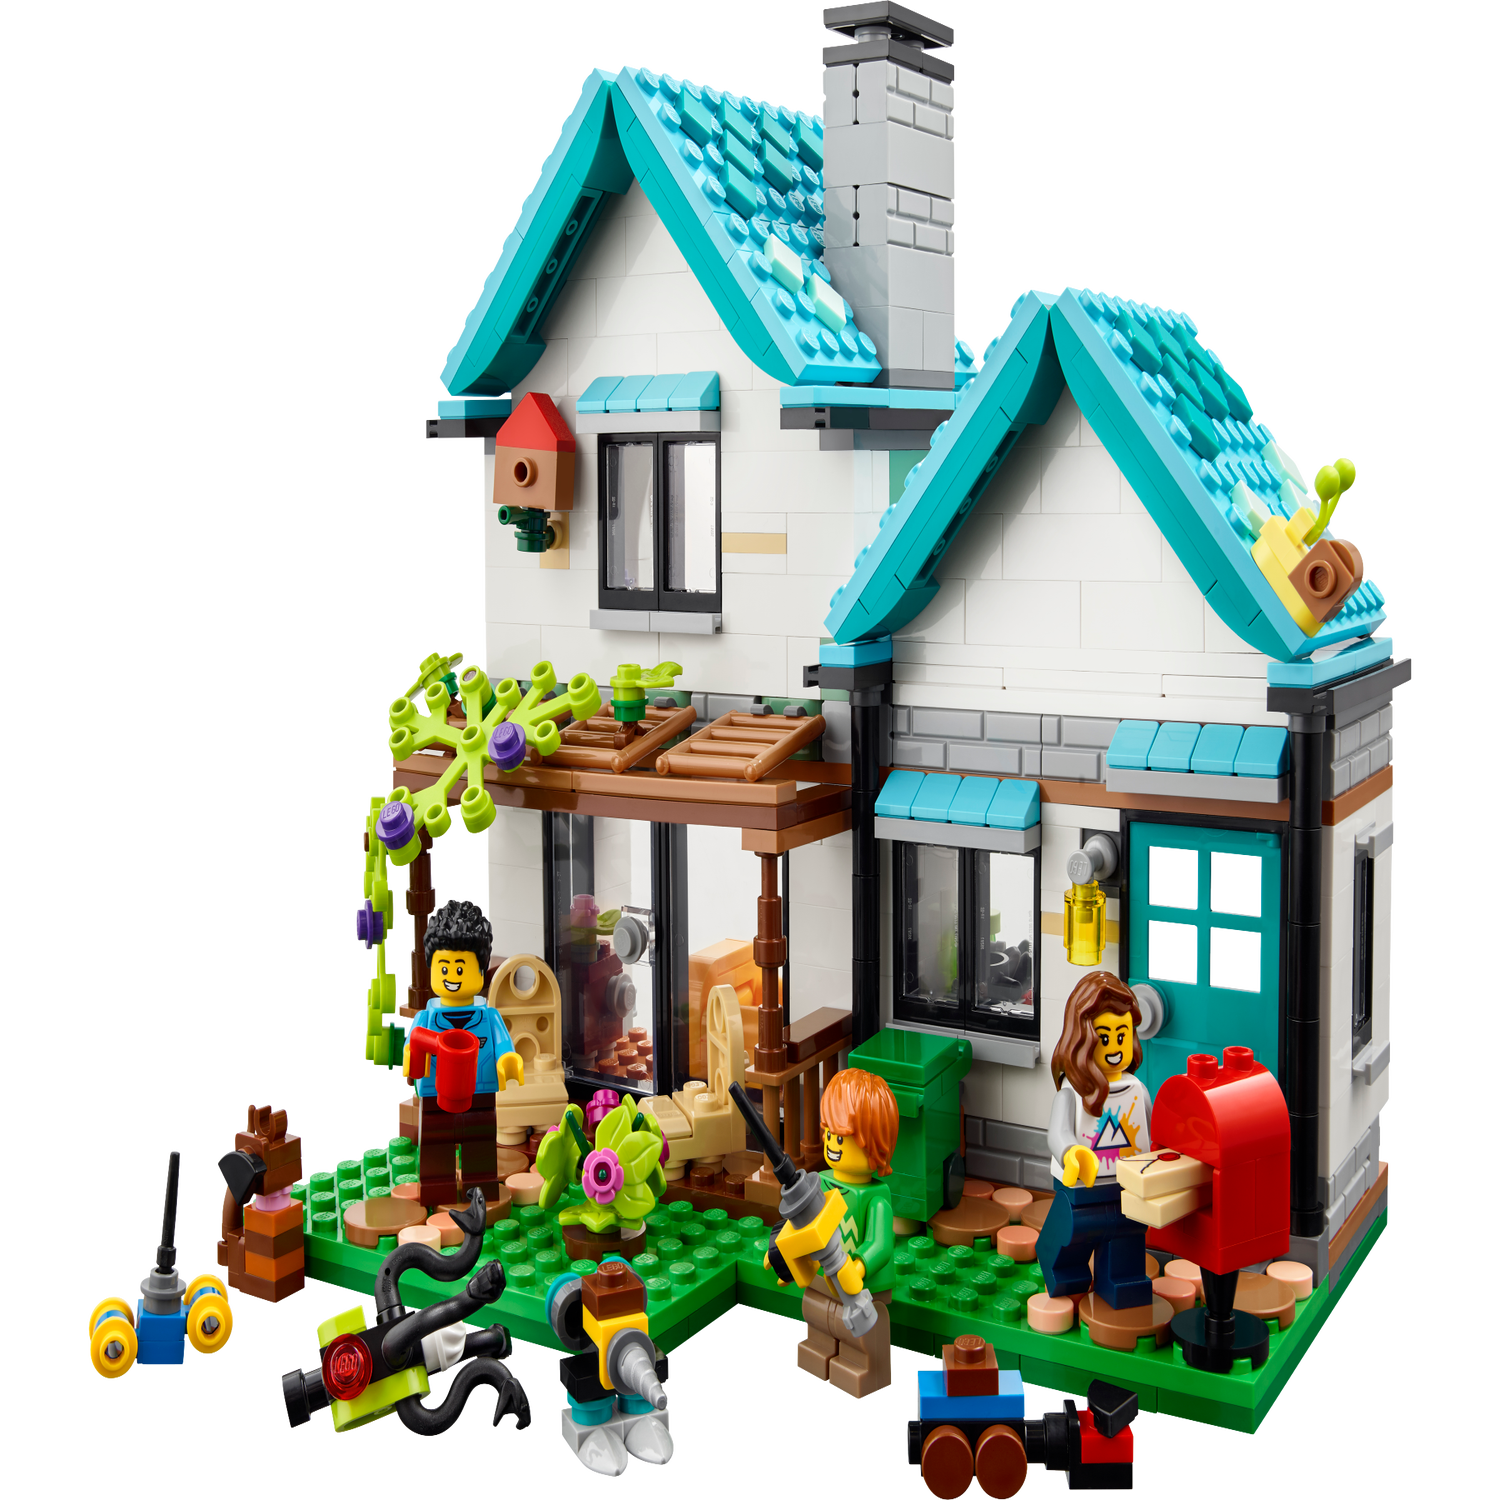 LEGO Creator 3en1 La maison accueillante 31139 Ensemble de jeu de